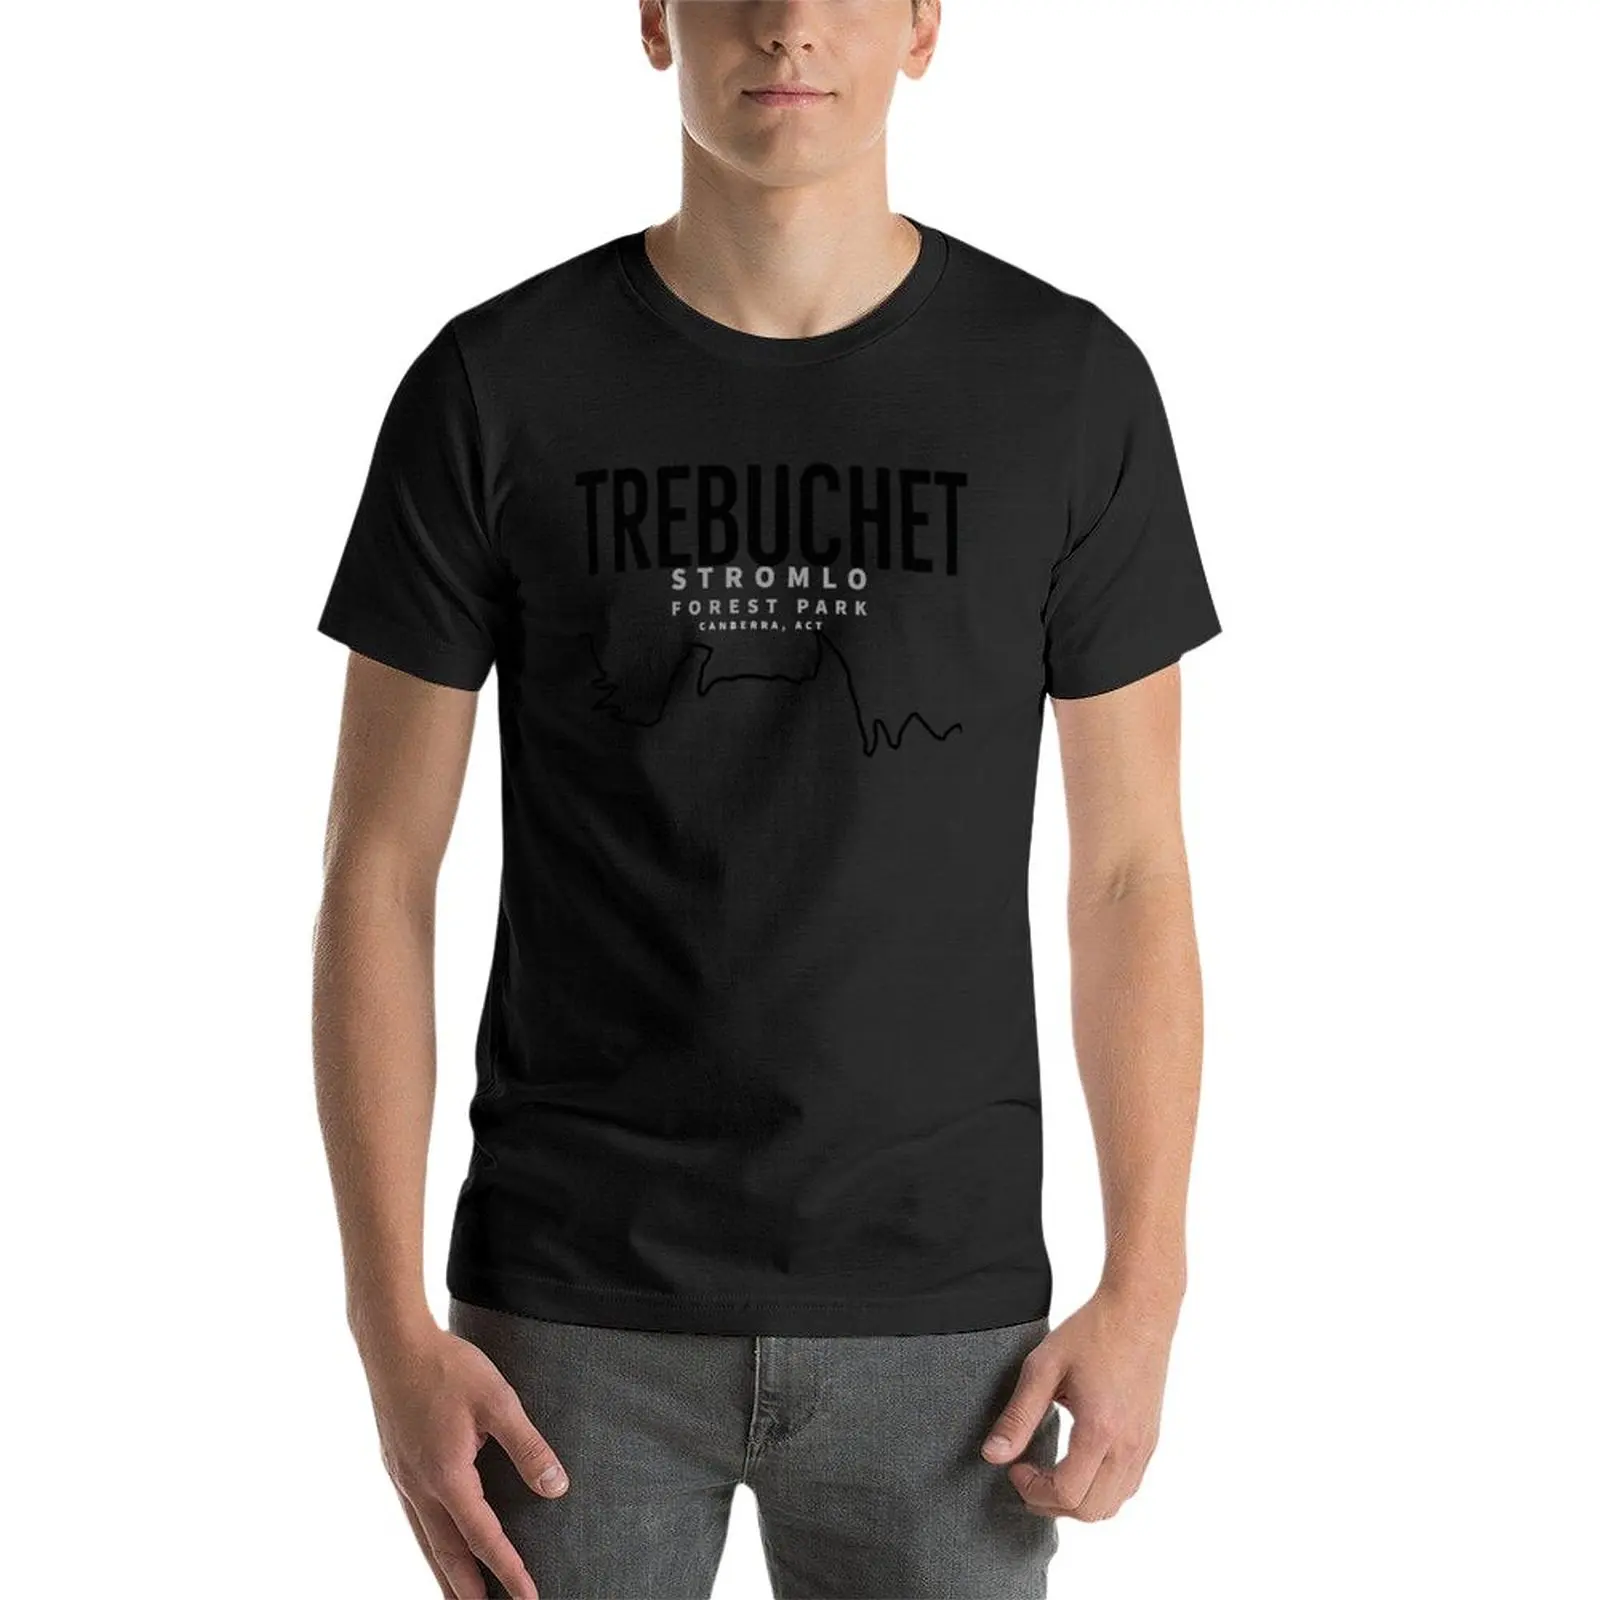 New Trebuchet, Stromlo Forest Park, Canberra, Act, Australia- Black Line 티셔츠 블라우스 남성 T 셔츠